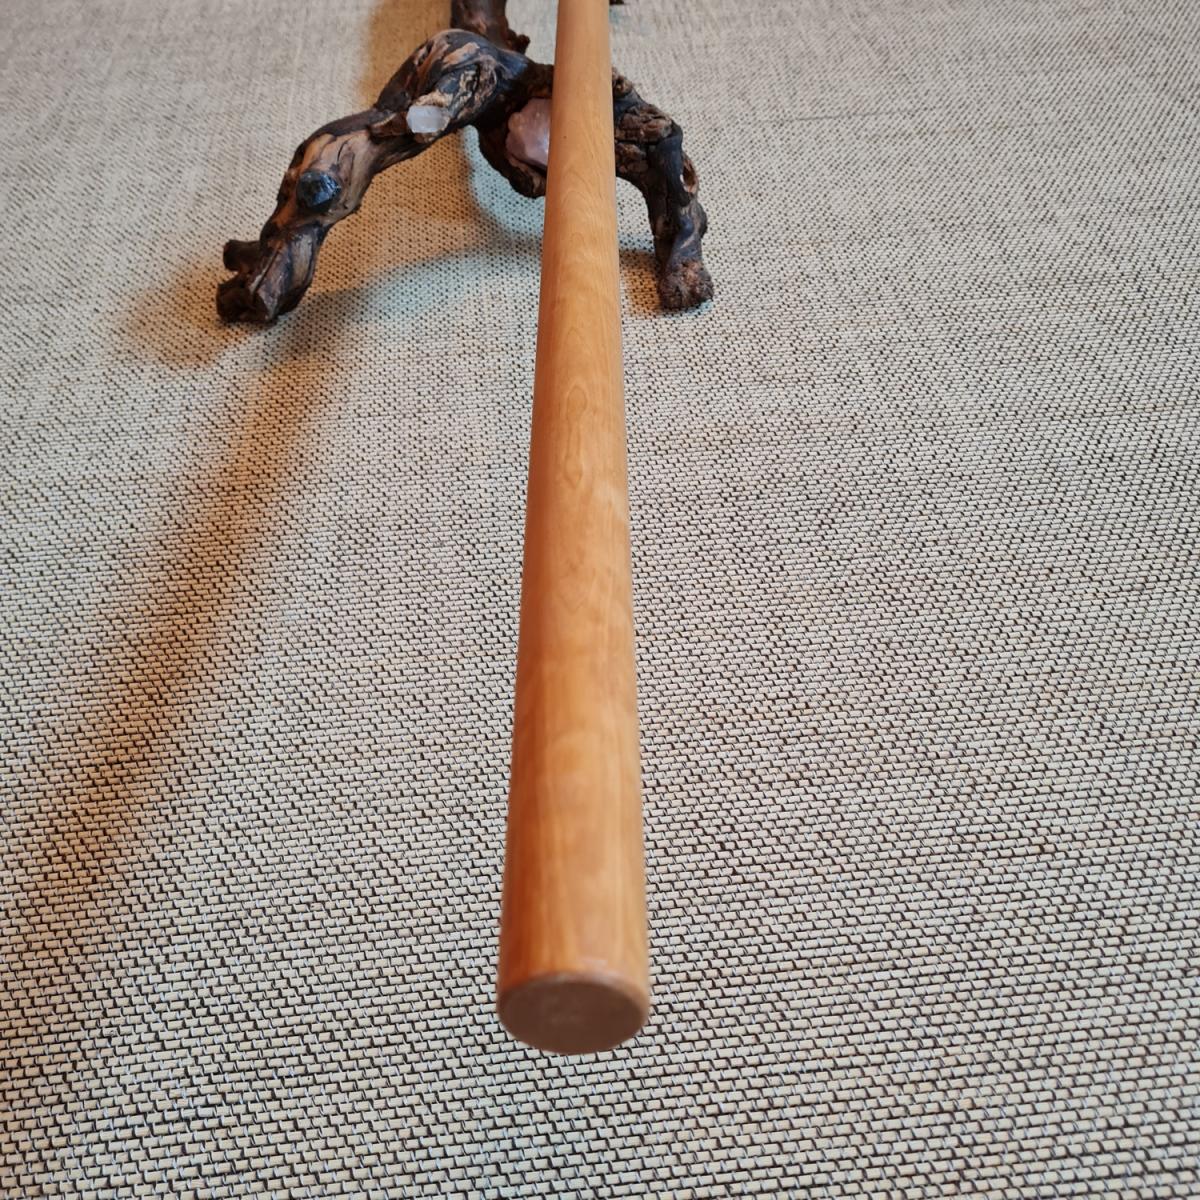 Buy birch wood bo stick online »www.bokken-shop.de suitable for Aikido, Iaido, Kobudō, Bujinkan, Koryu, Jodo ✓ Your Budo specialist dealer!